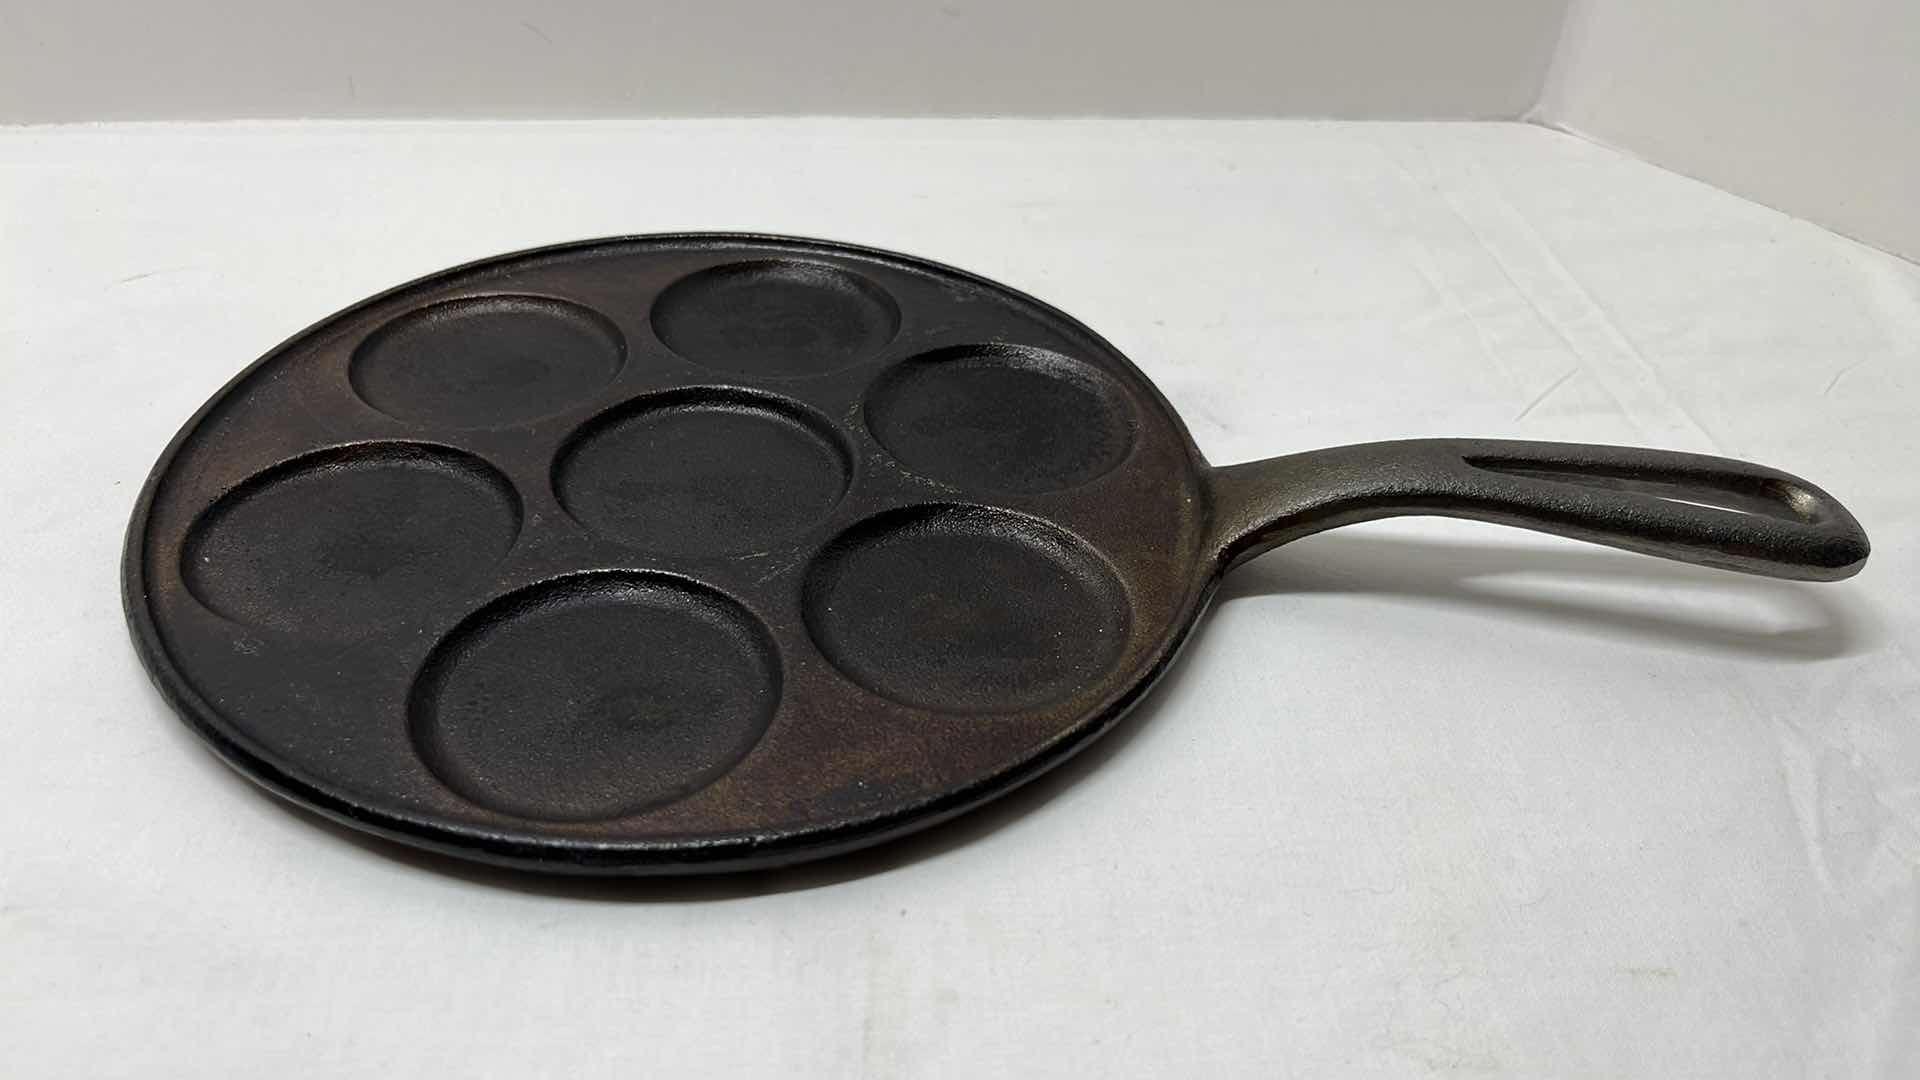 Photo 1 of 9” CAST IRON PLETT PAN FOR DANISH PANCAKES